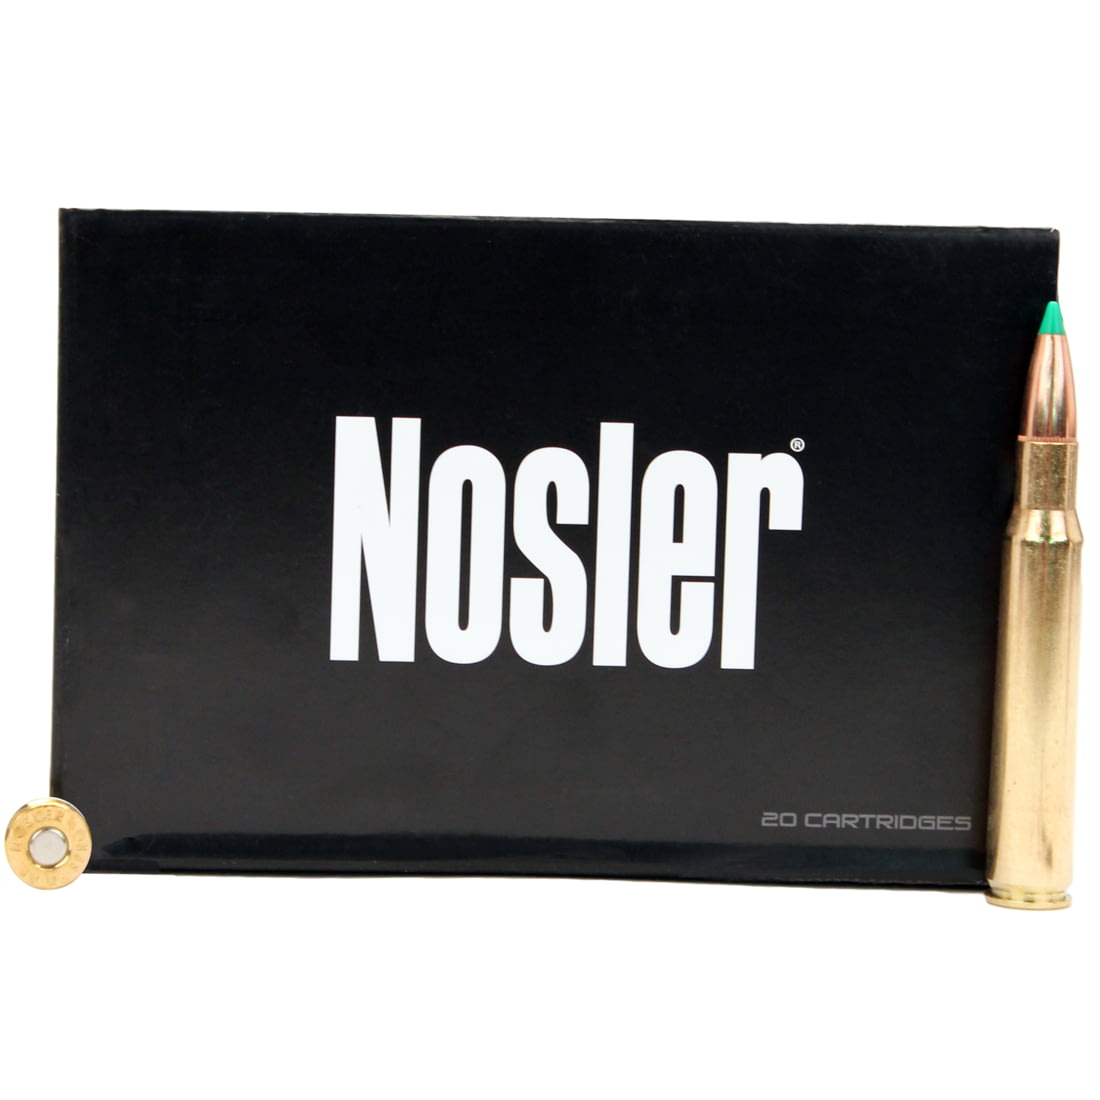 Nosler .30-06 Springfield Ballistic Tip 180 grain Brass Cased Rifle Ammunition